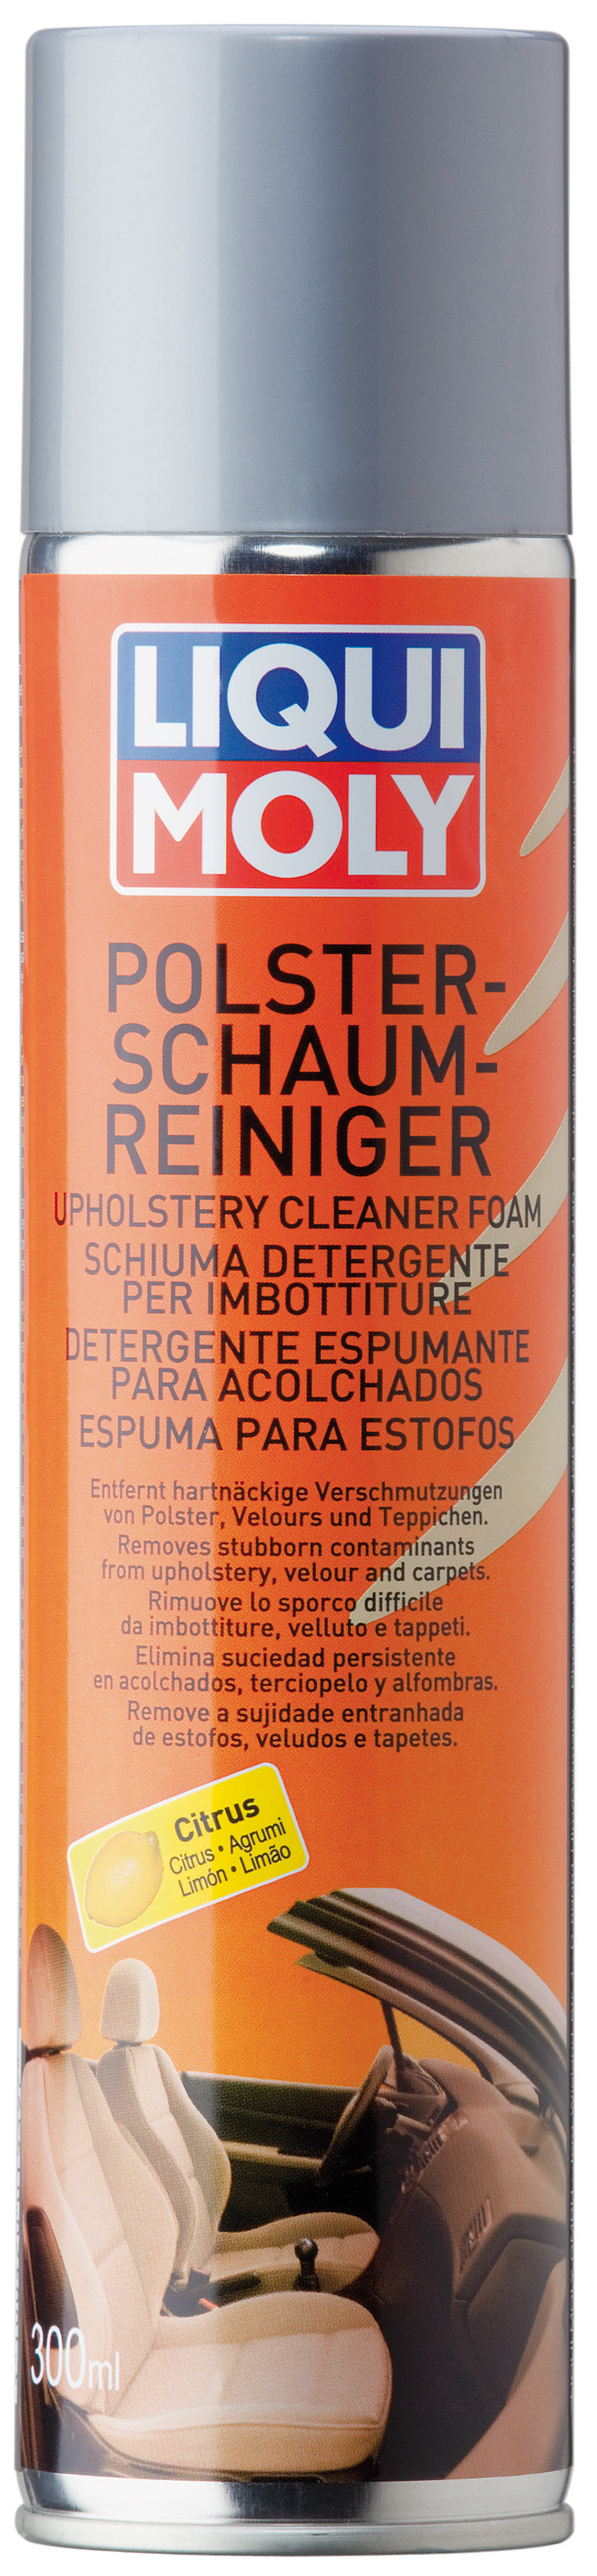 Пена для очистки салона Polster-Schaum-Reiniger, 300мл - Liqui Moly 1539